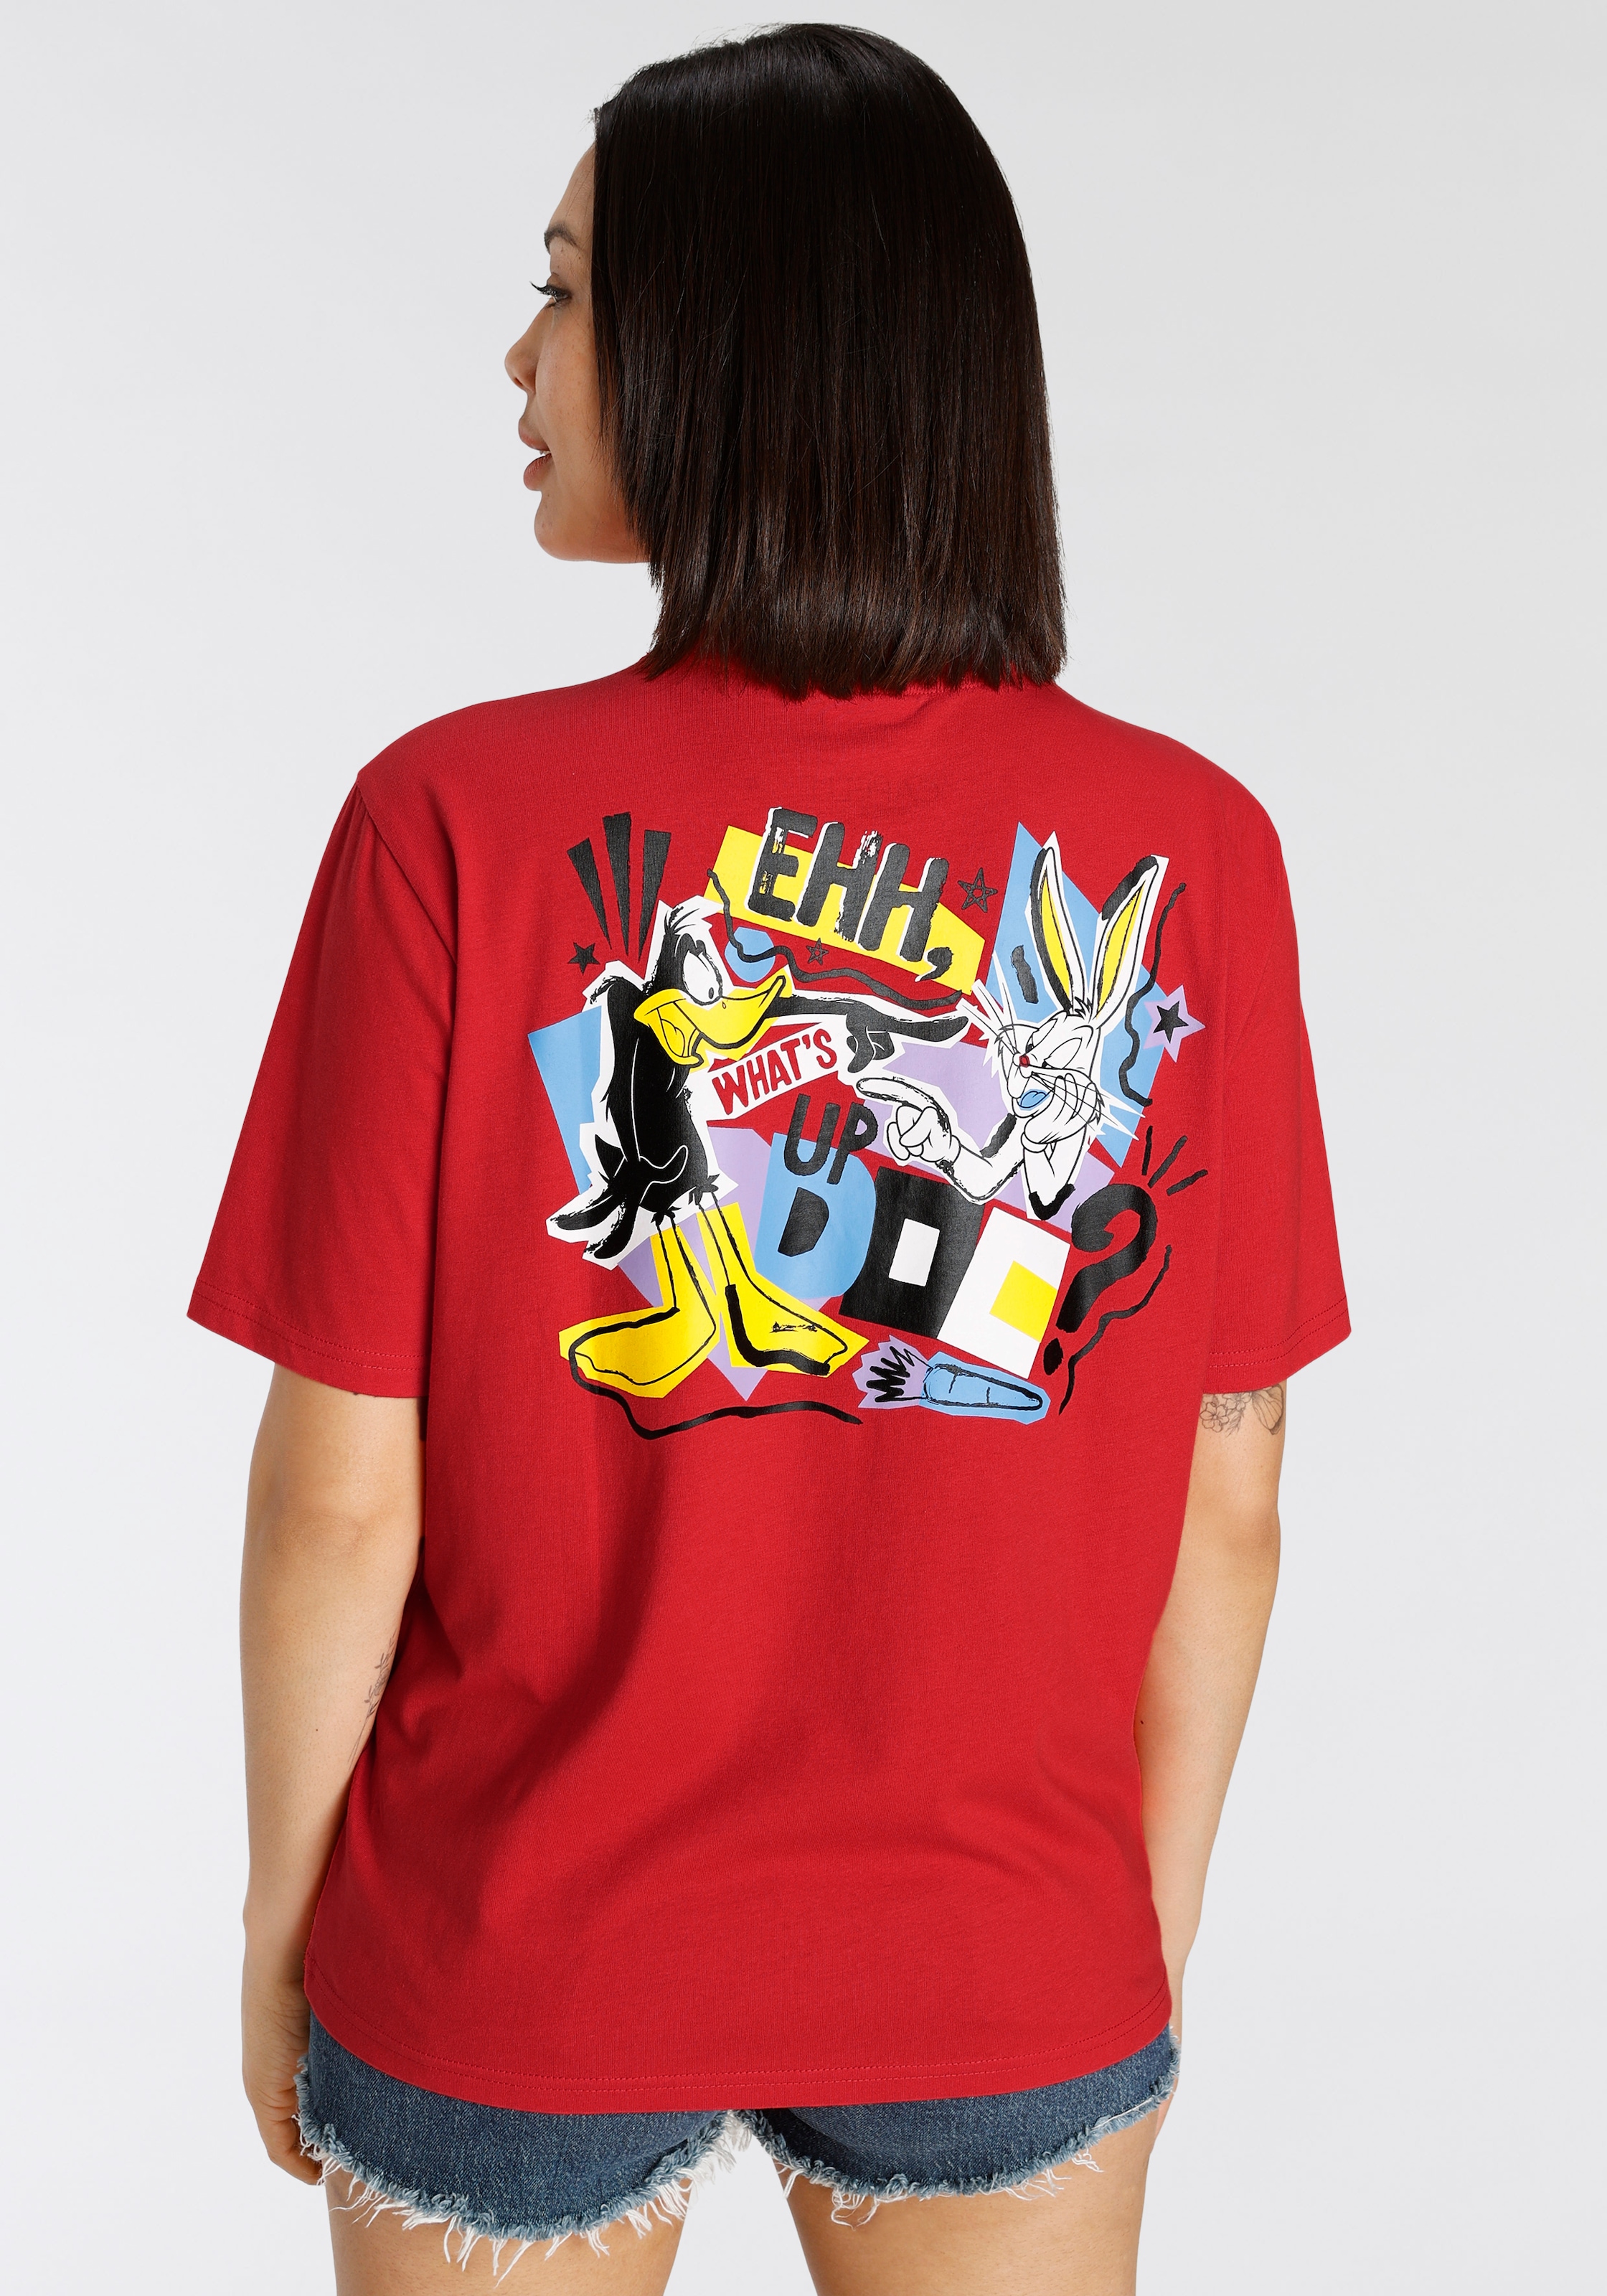 New Duffy Capelli bei Duck T-Shirt, OTTOversand Comic-Motiv Bugs mit Bunny York mit